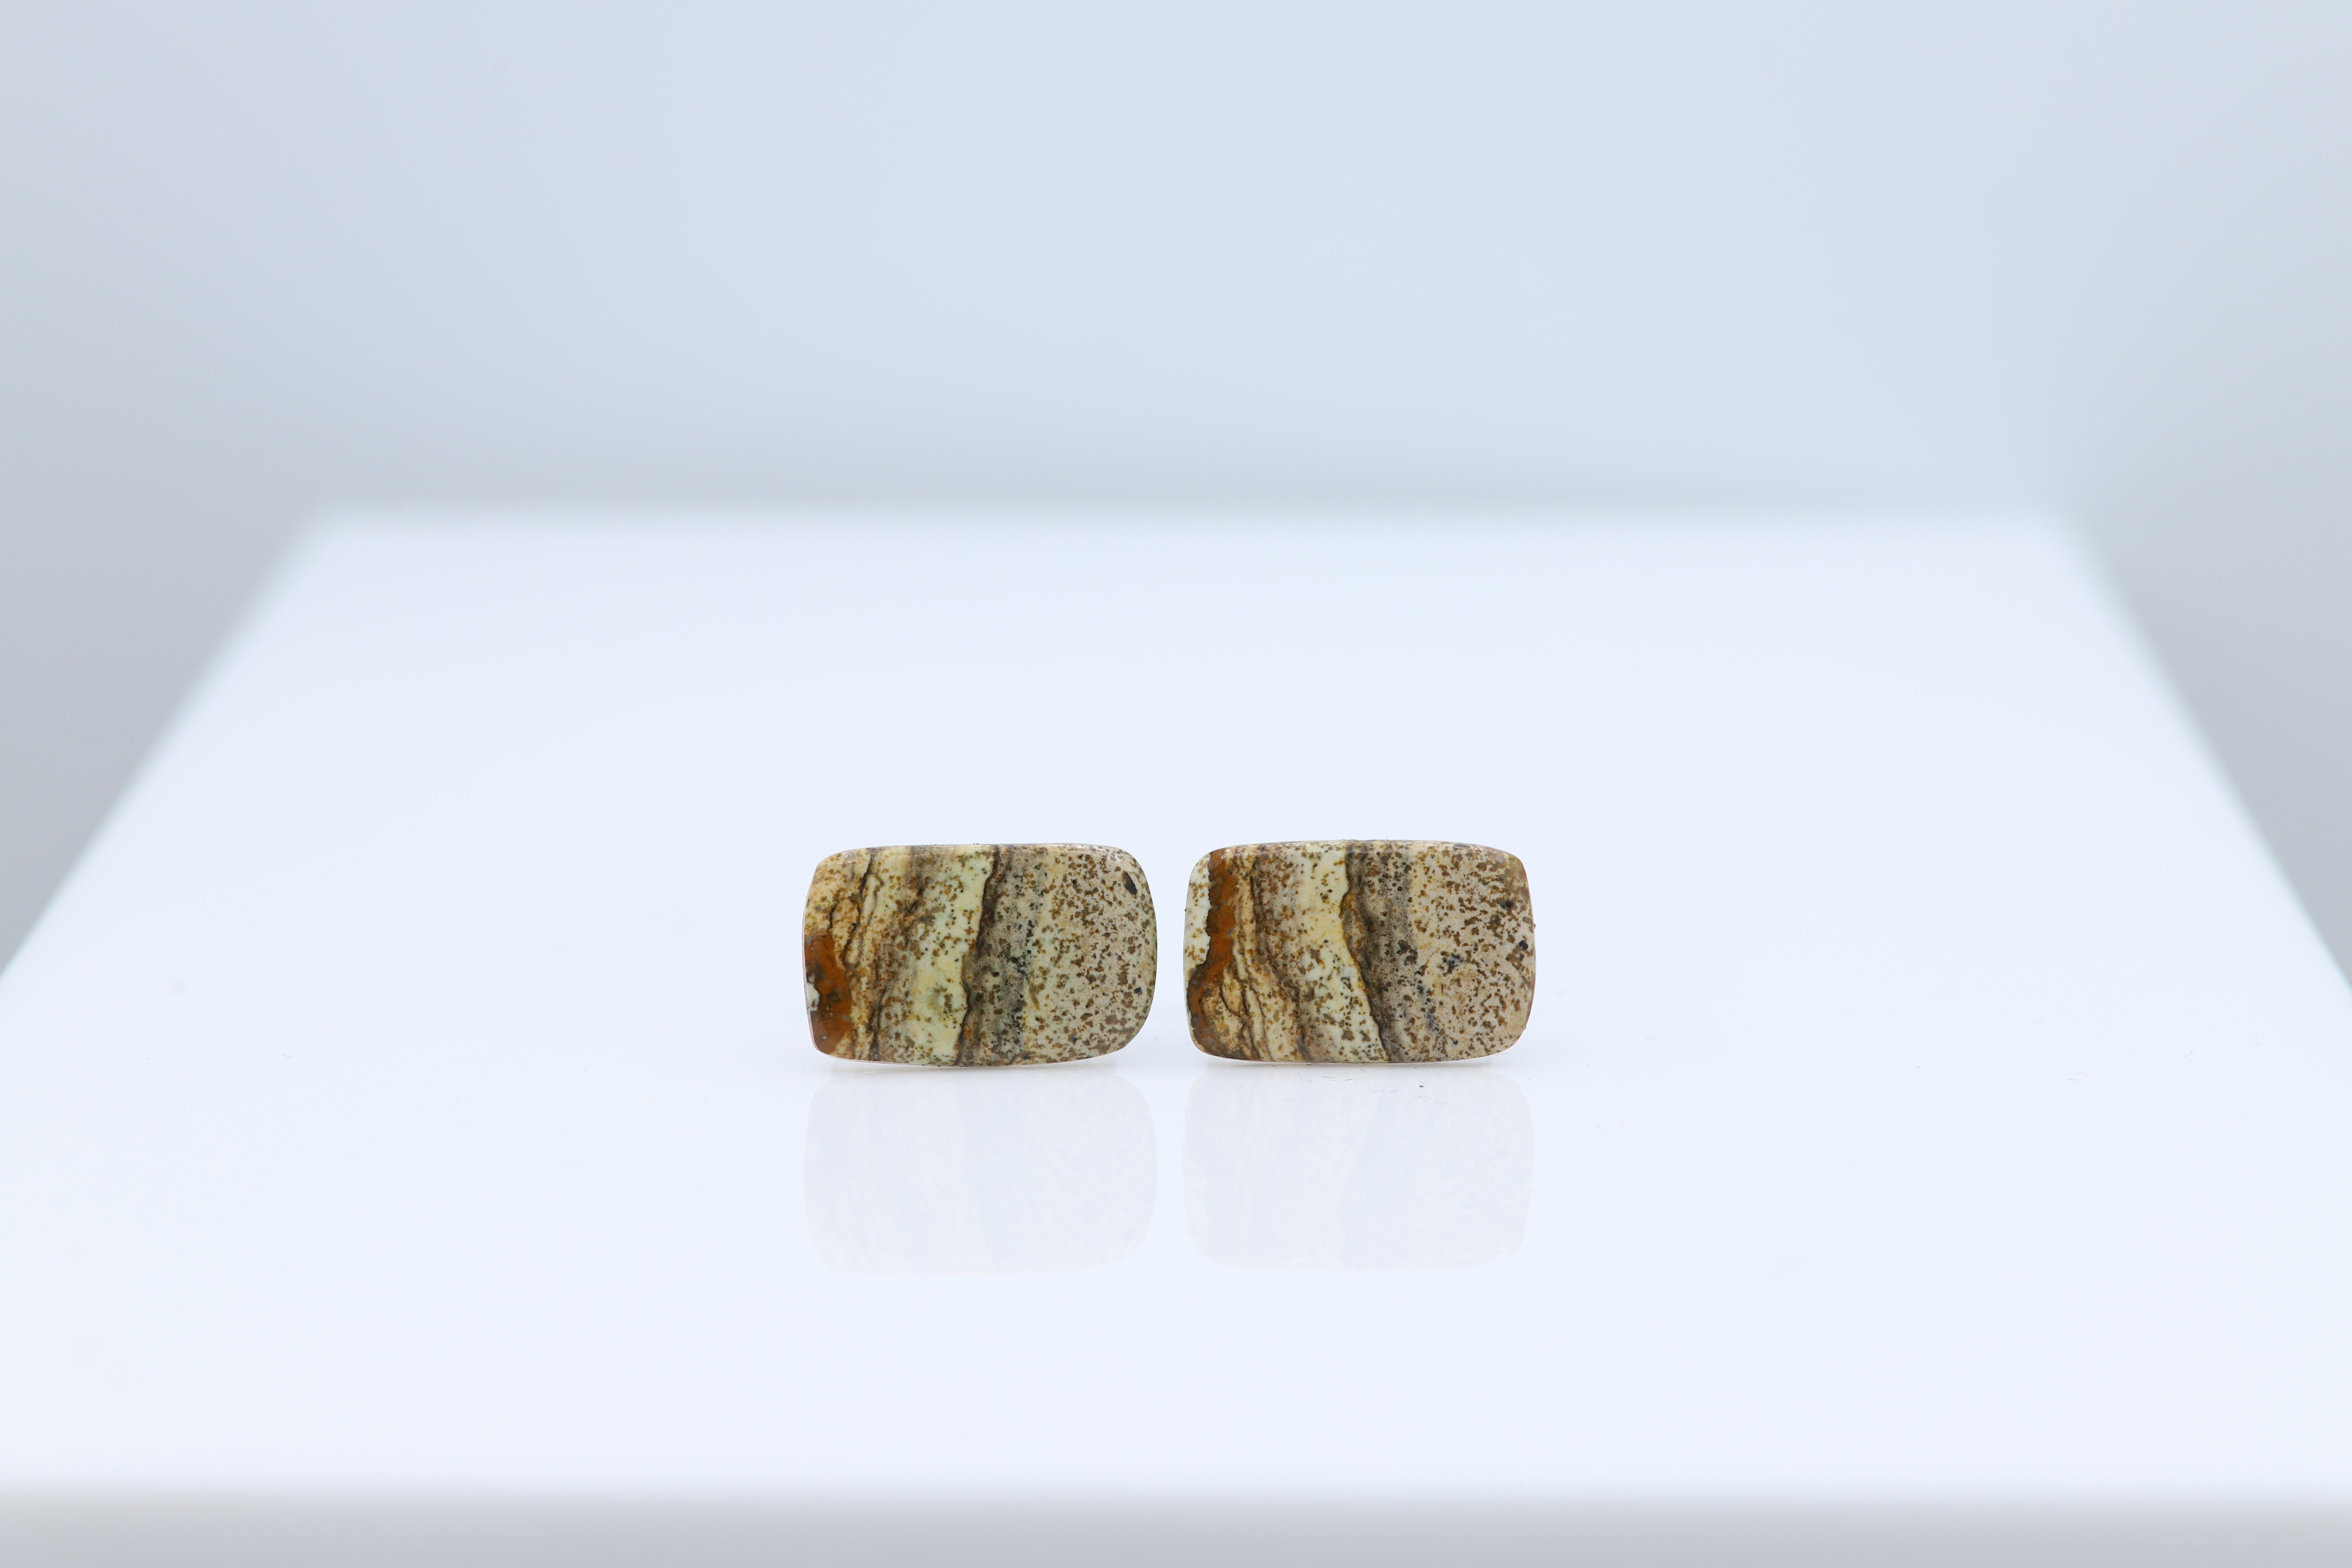 New unique men's cufflink - natural stone.
Stone name: 